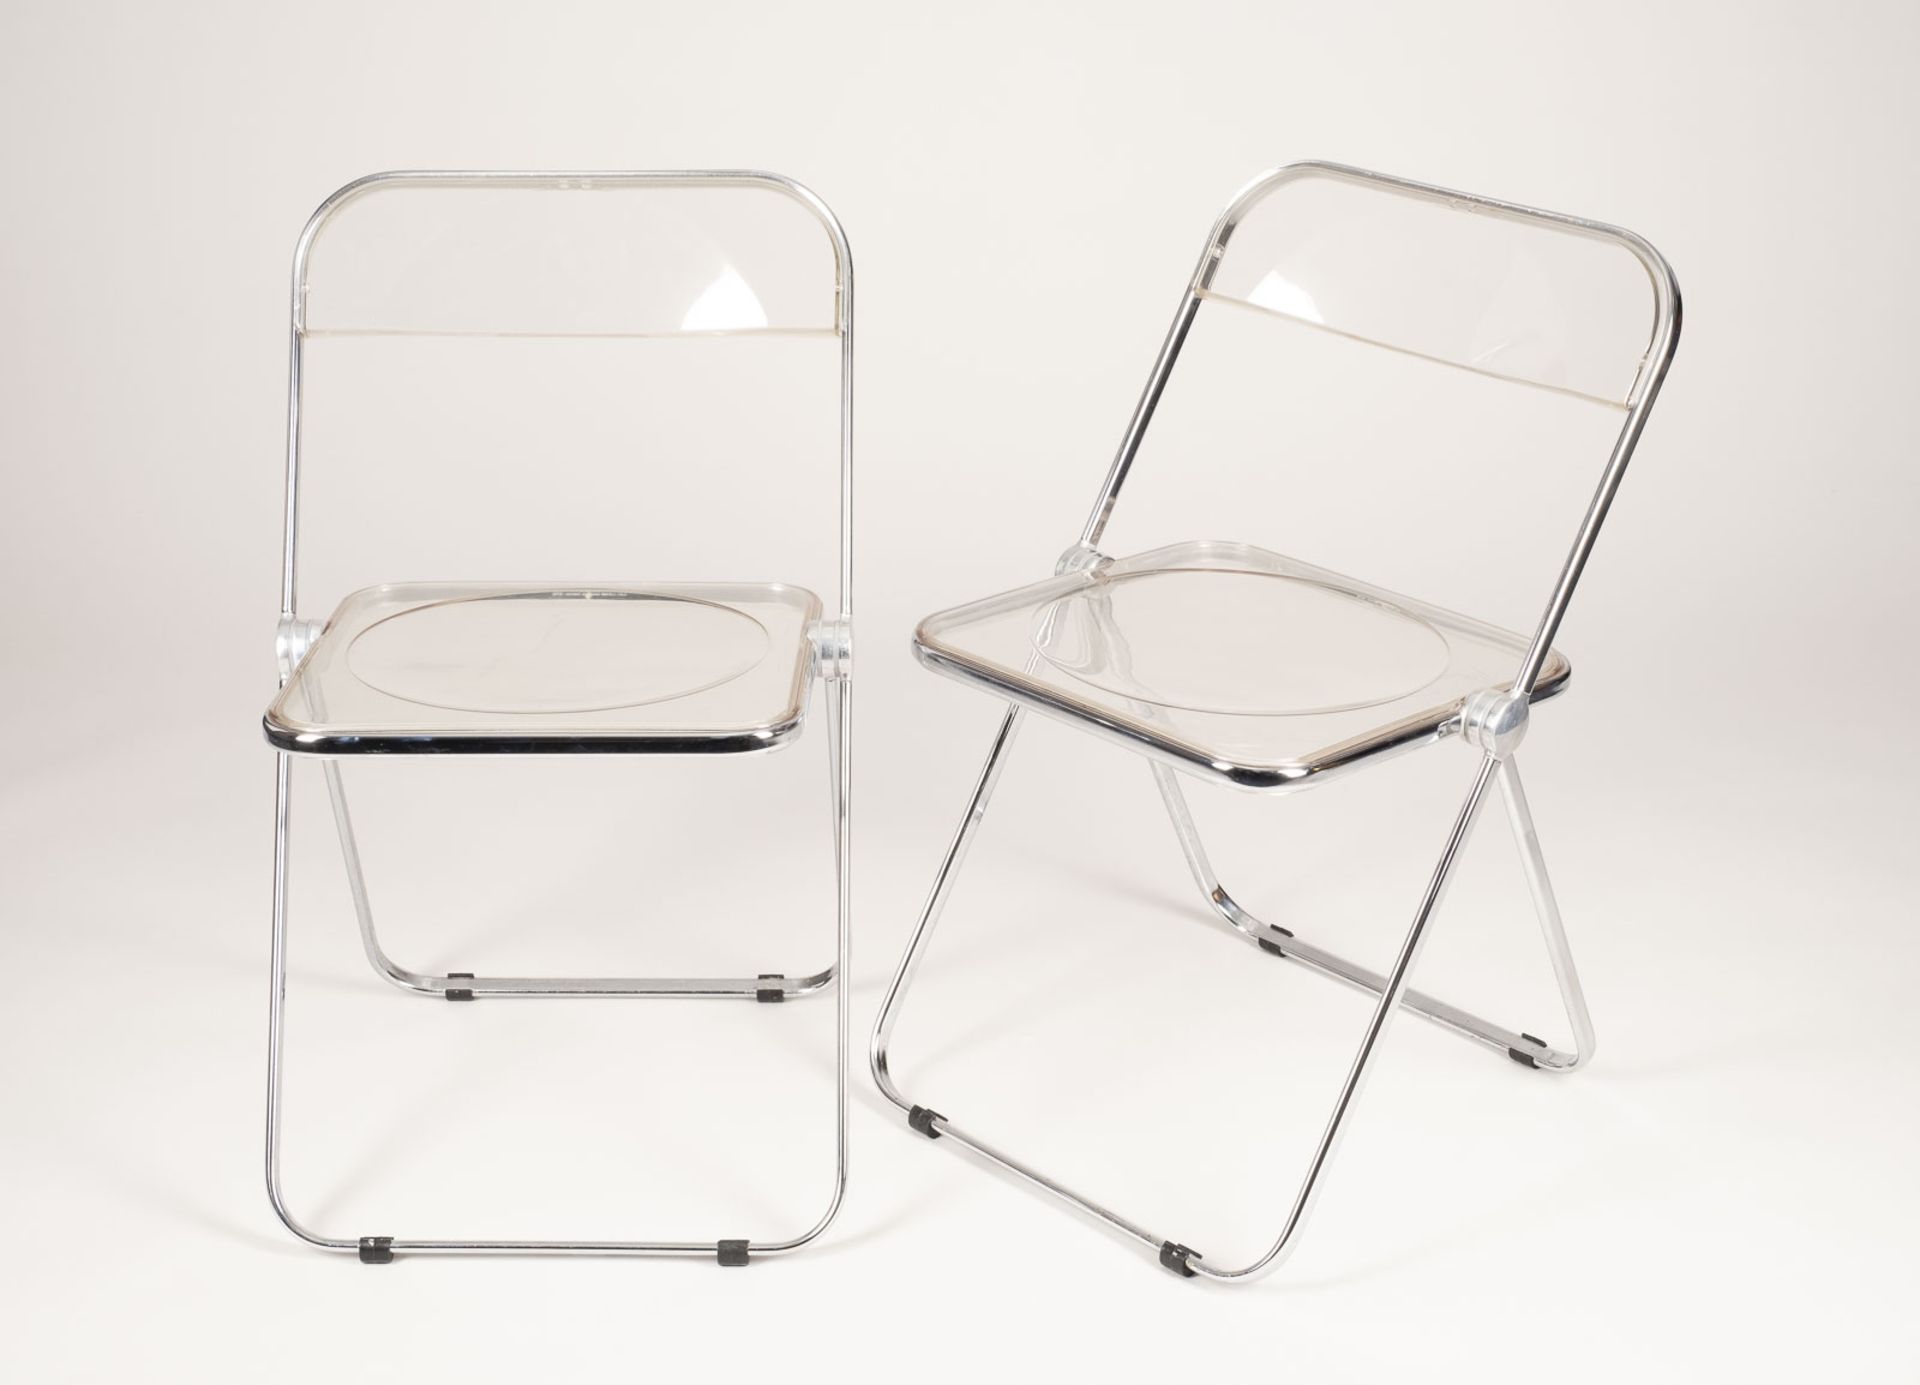 Sechs Stühle / Klappstühle Modell 'Plia' - Image 2 of 2